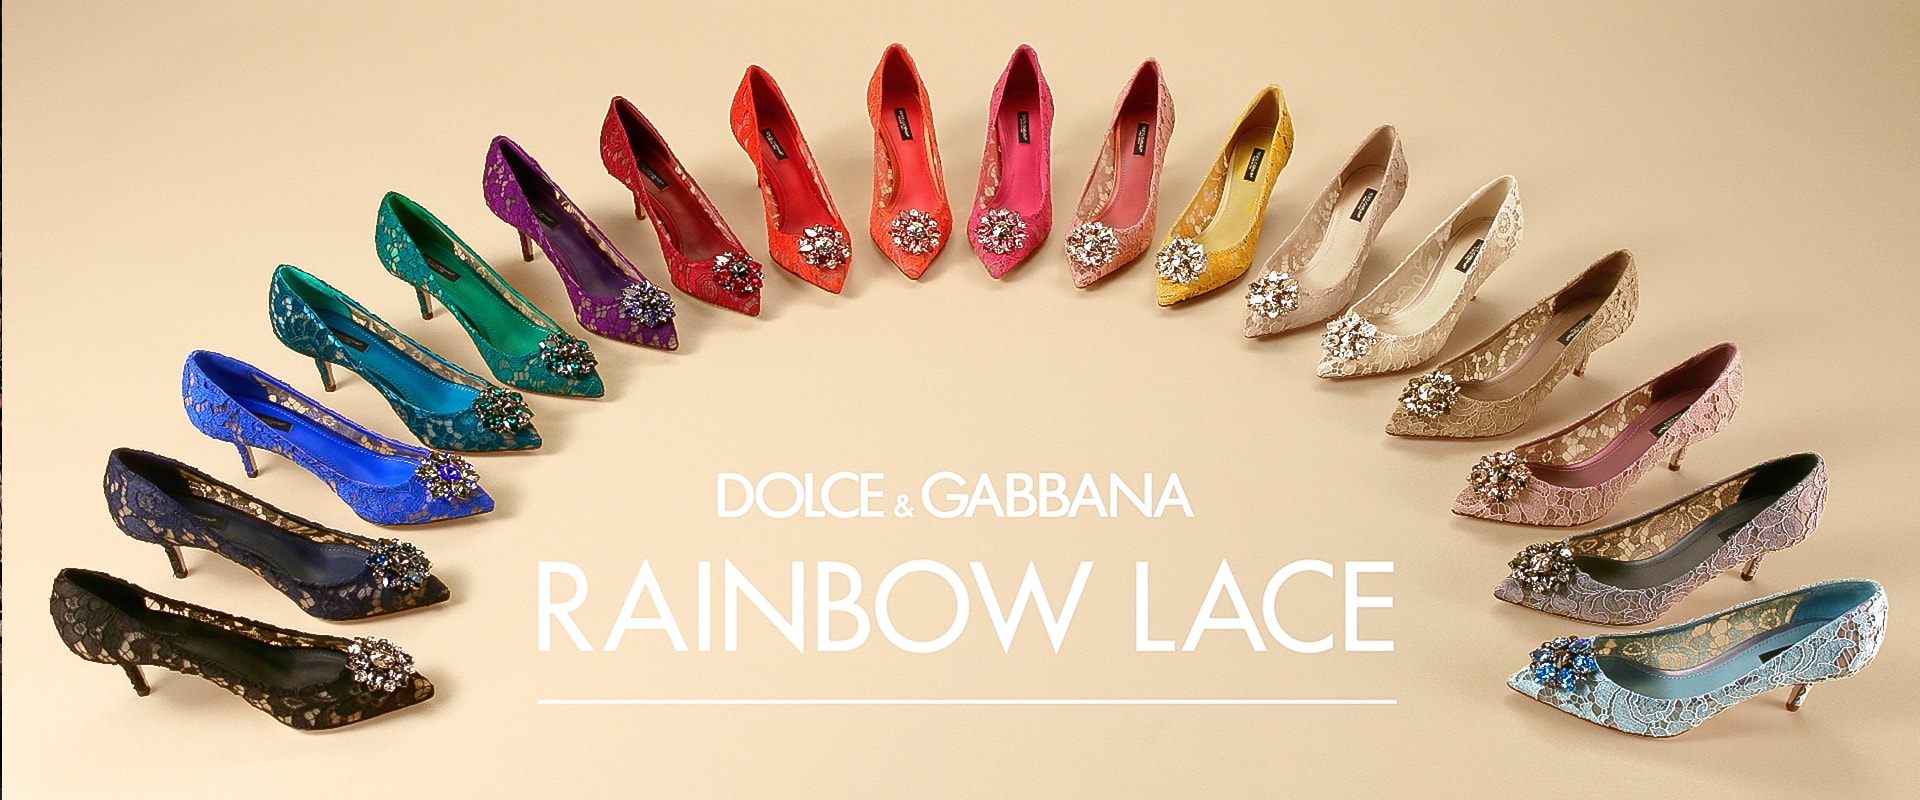 dolce-gabbana-rainbow-lace-collection-top-banner-desktop